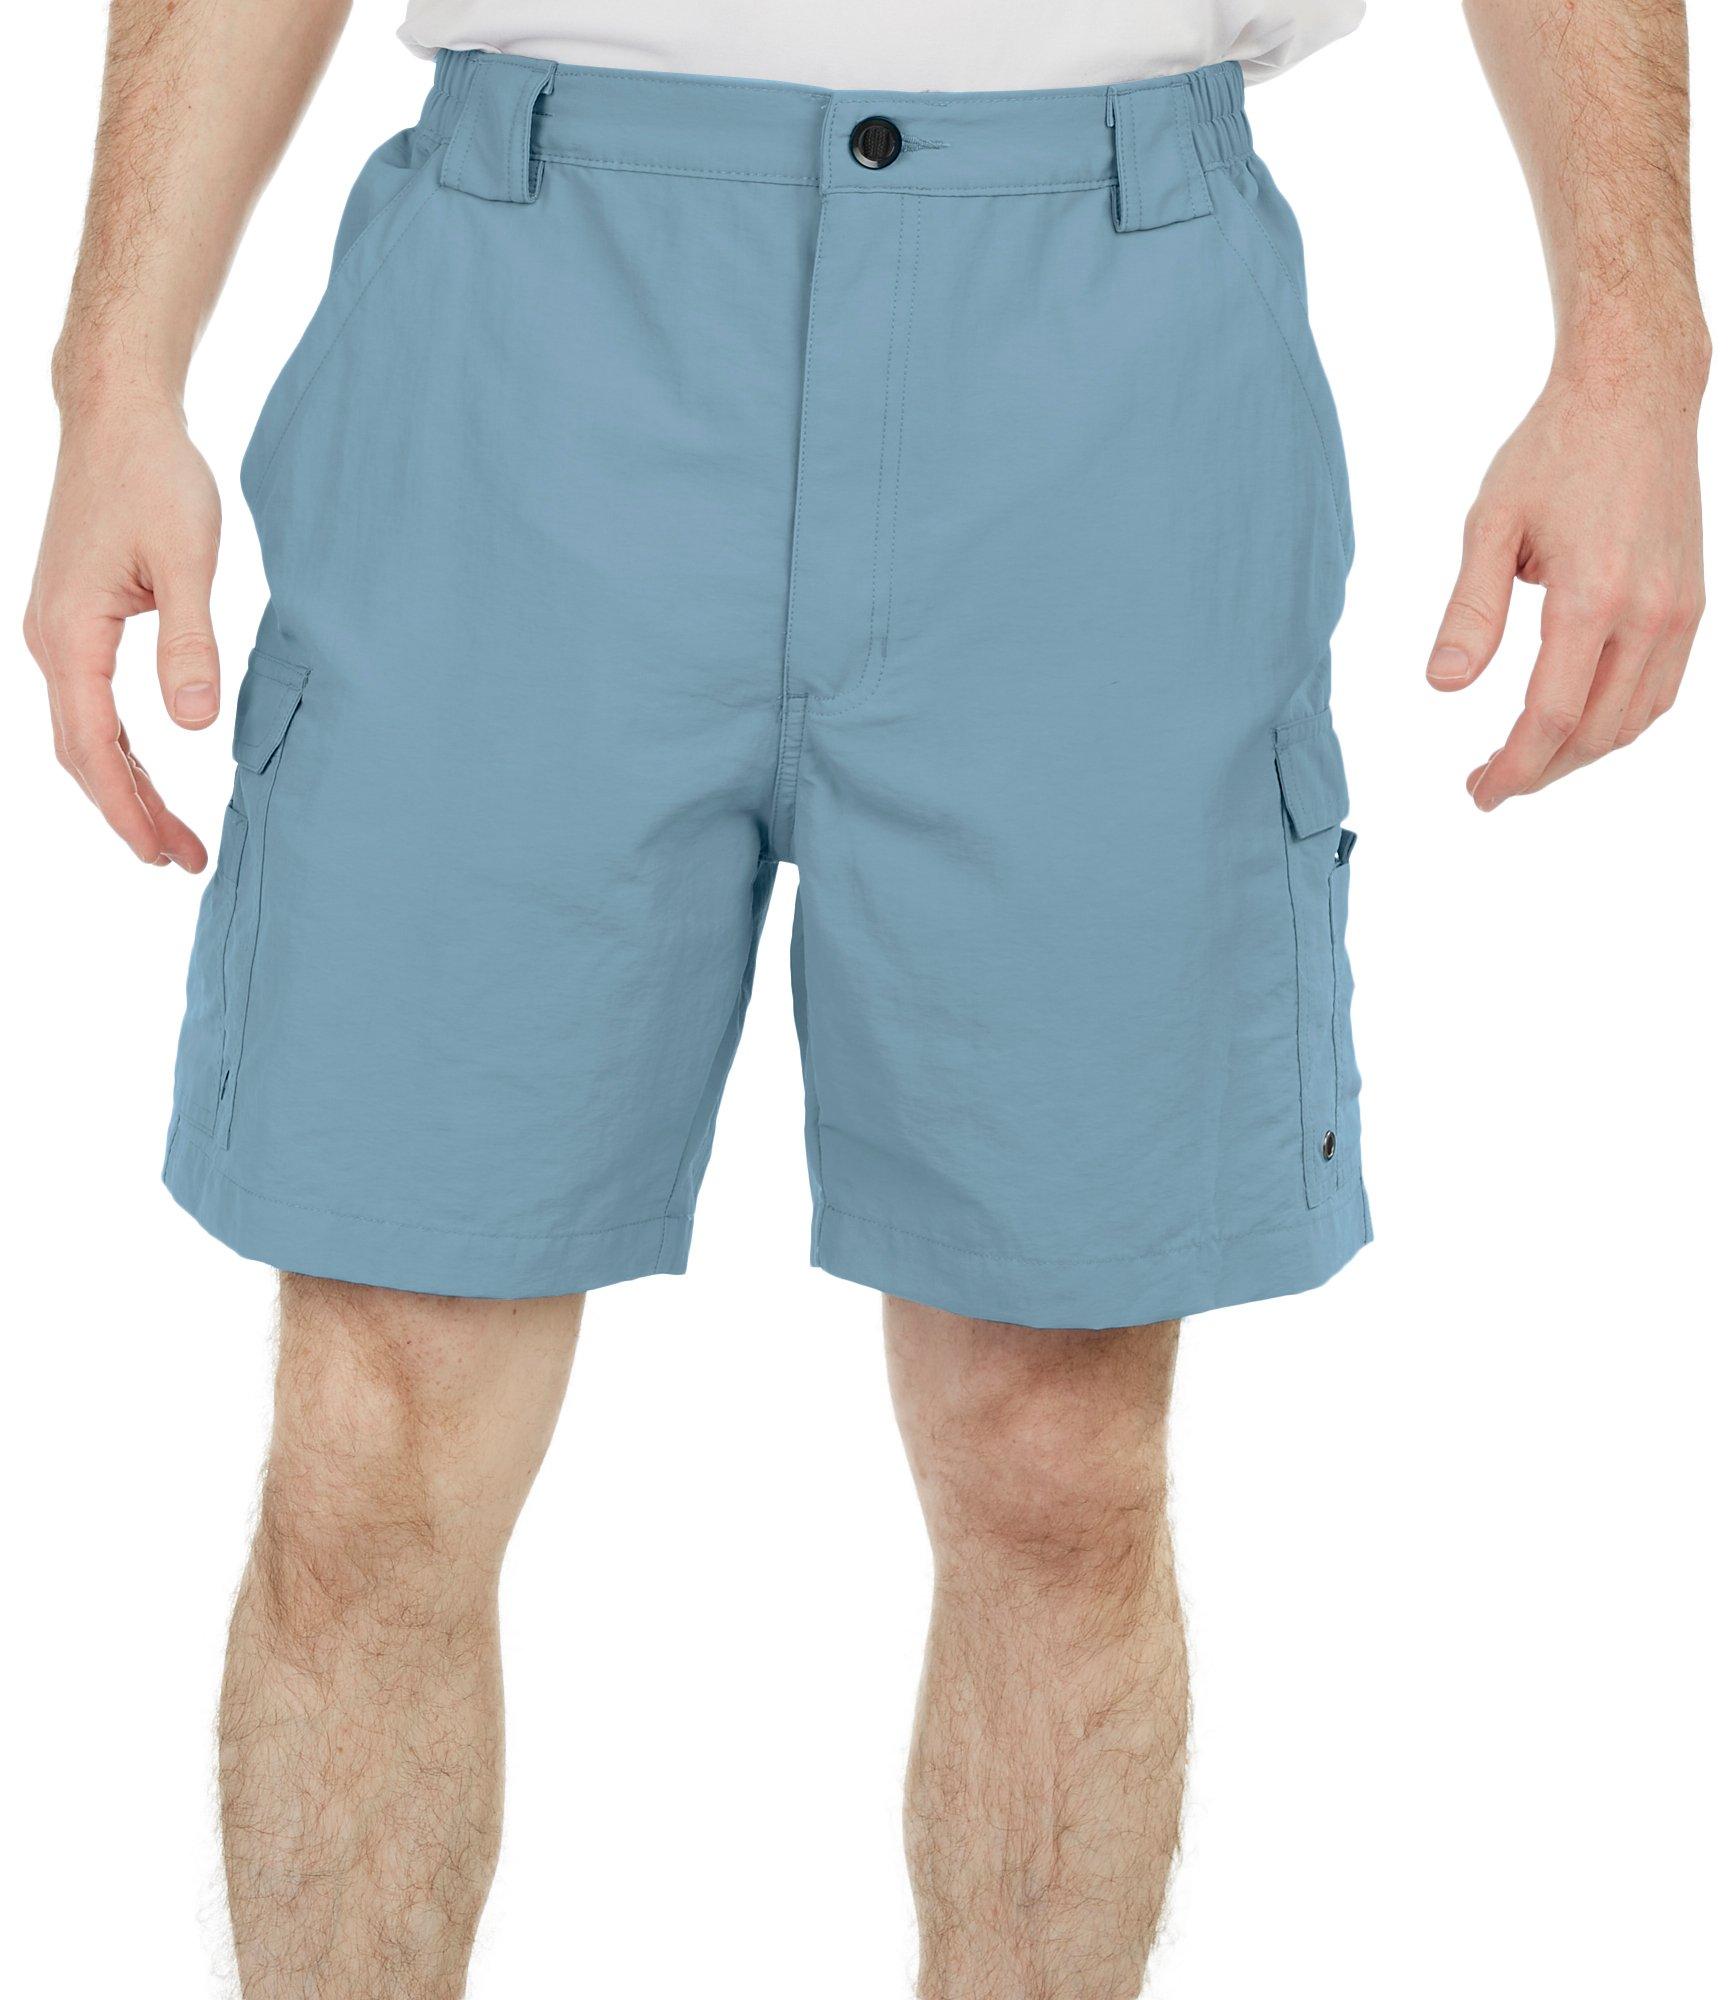 Reel Legends Mens 7.5 in. Solid Bonefish UPF 50 Cargo Shorts - Copen Blue - Medium